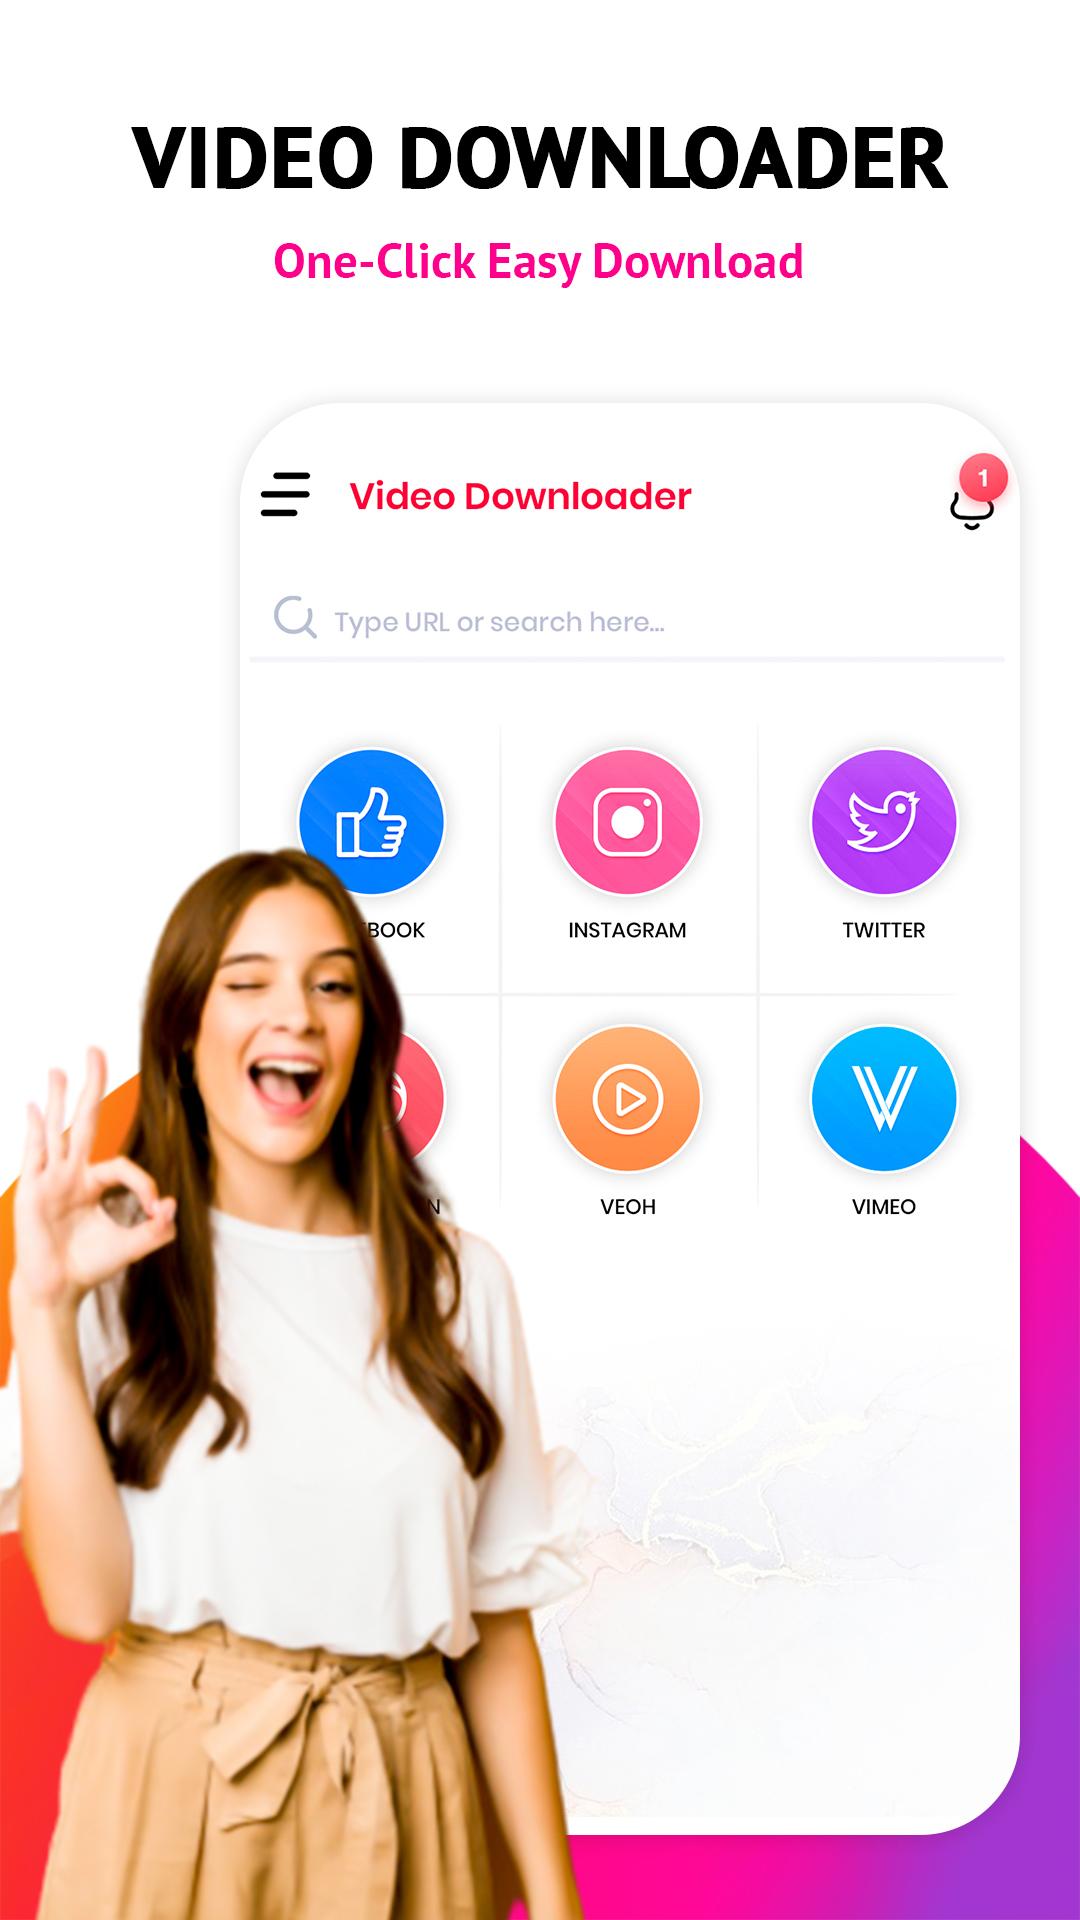 Free Video Downloader - XN Video Downloader 1.2 Screenshot 1